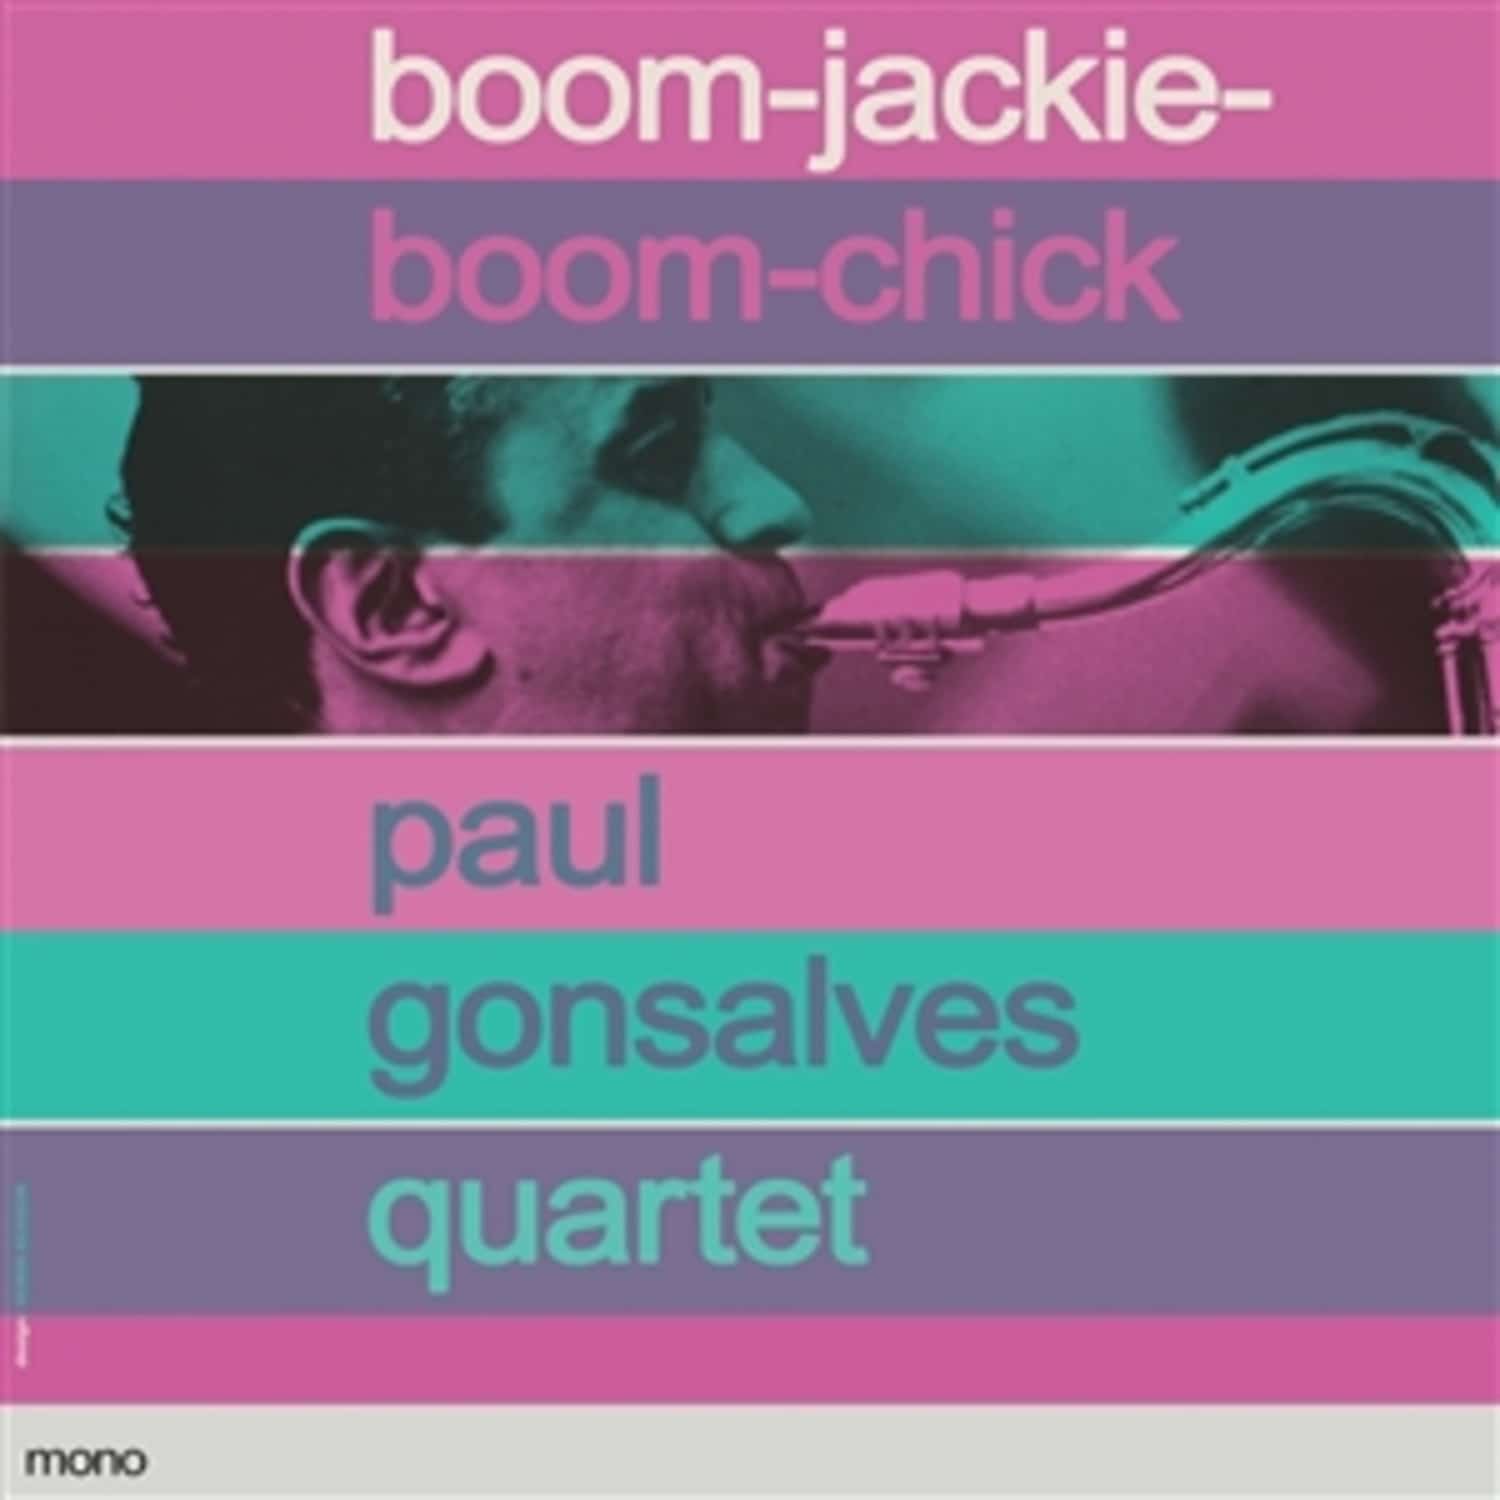 Paul Gonsalves Quartet - BOOM-JACKIE-BOOM-CHICK 